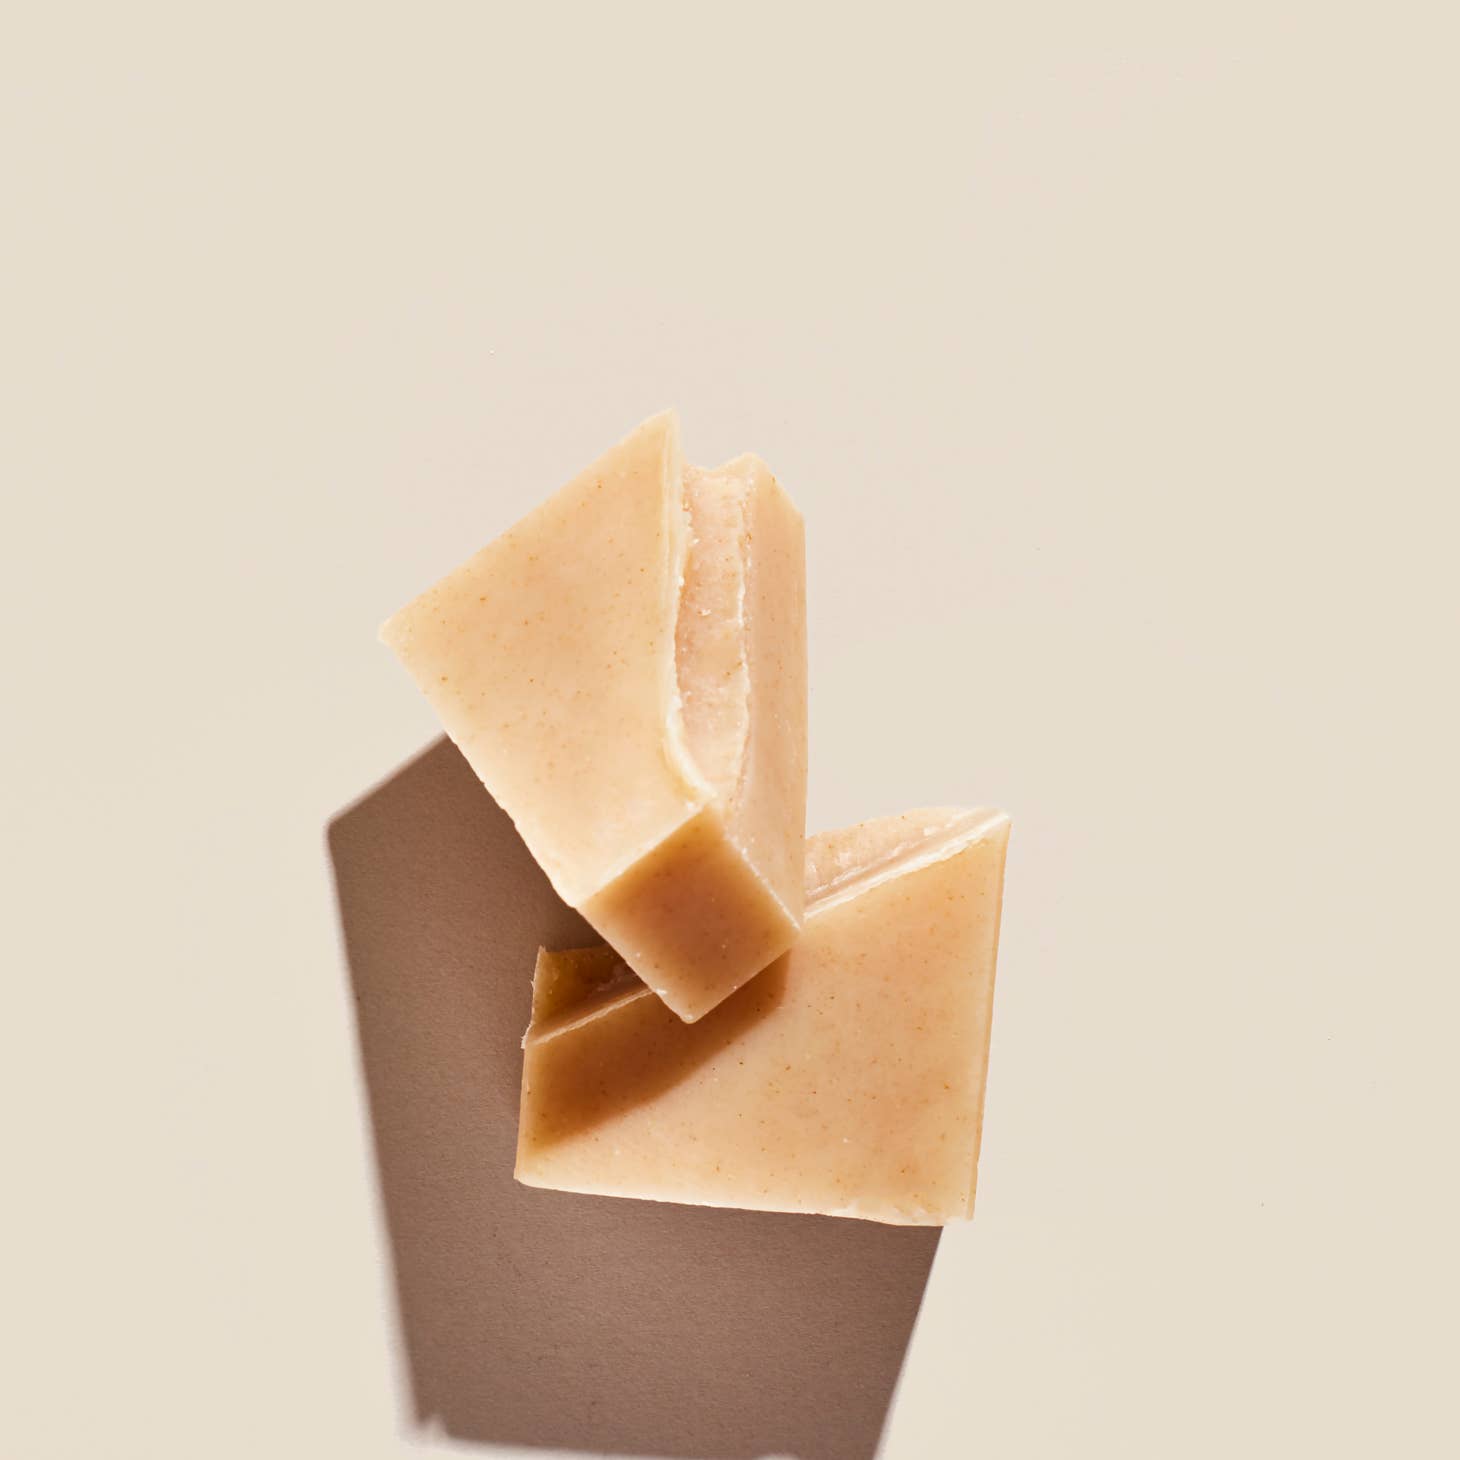 Palermo's Coconut Milk + Oatmeal soap bar, shown broken in half.